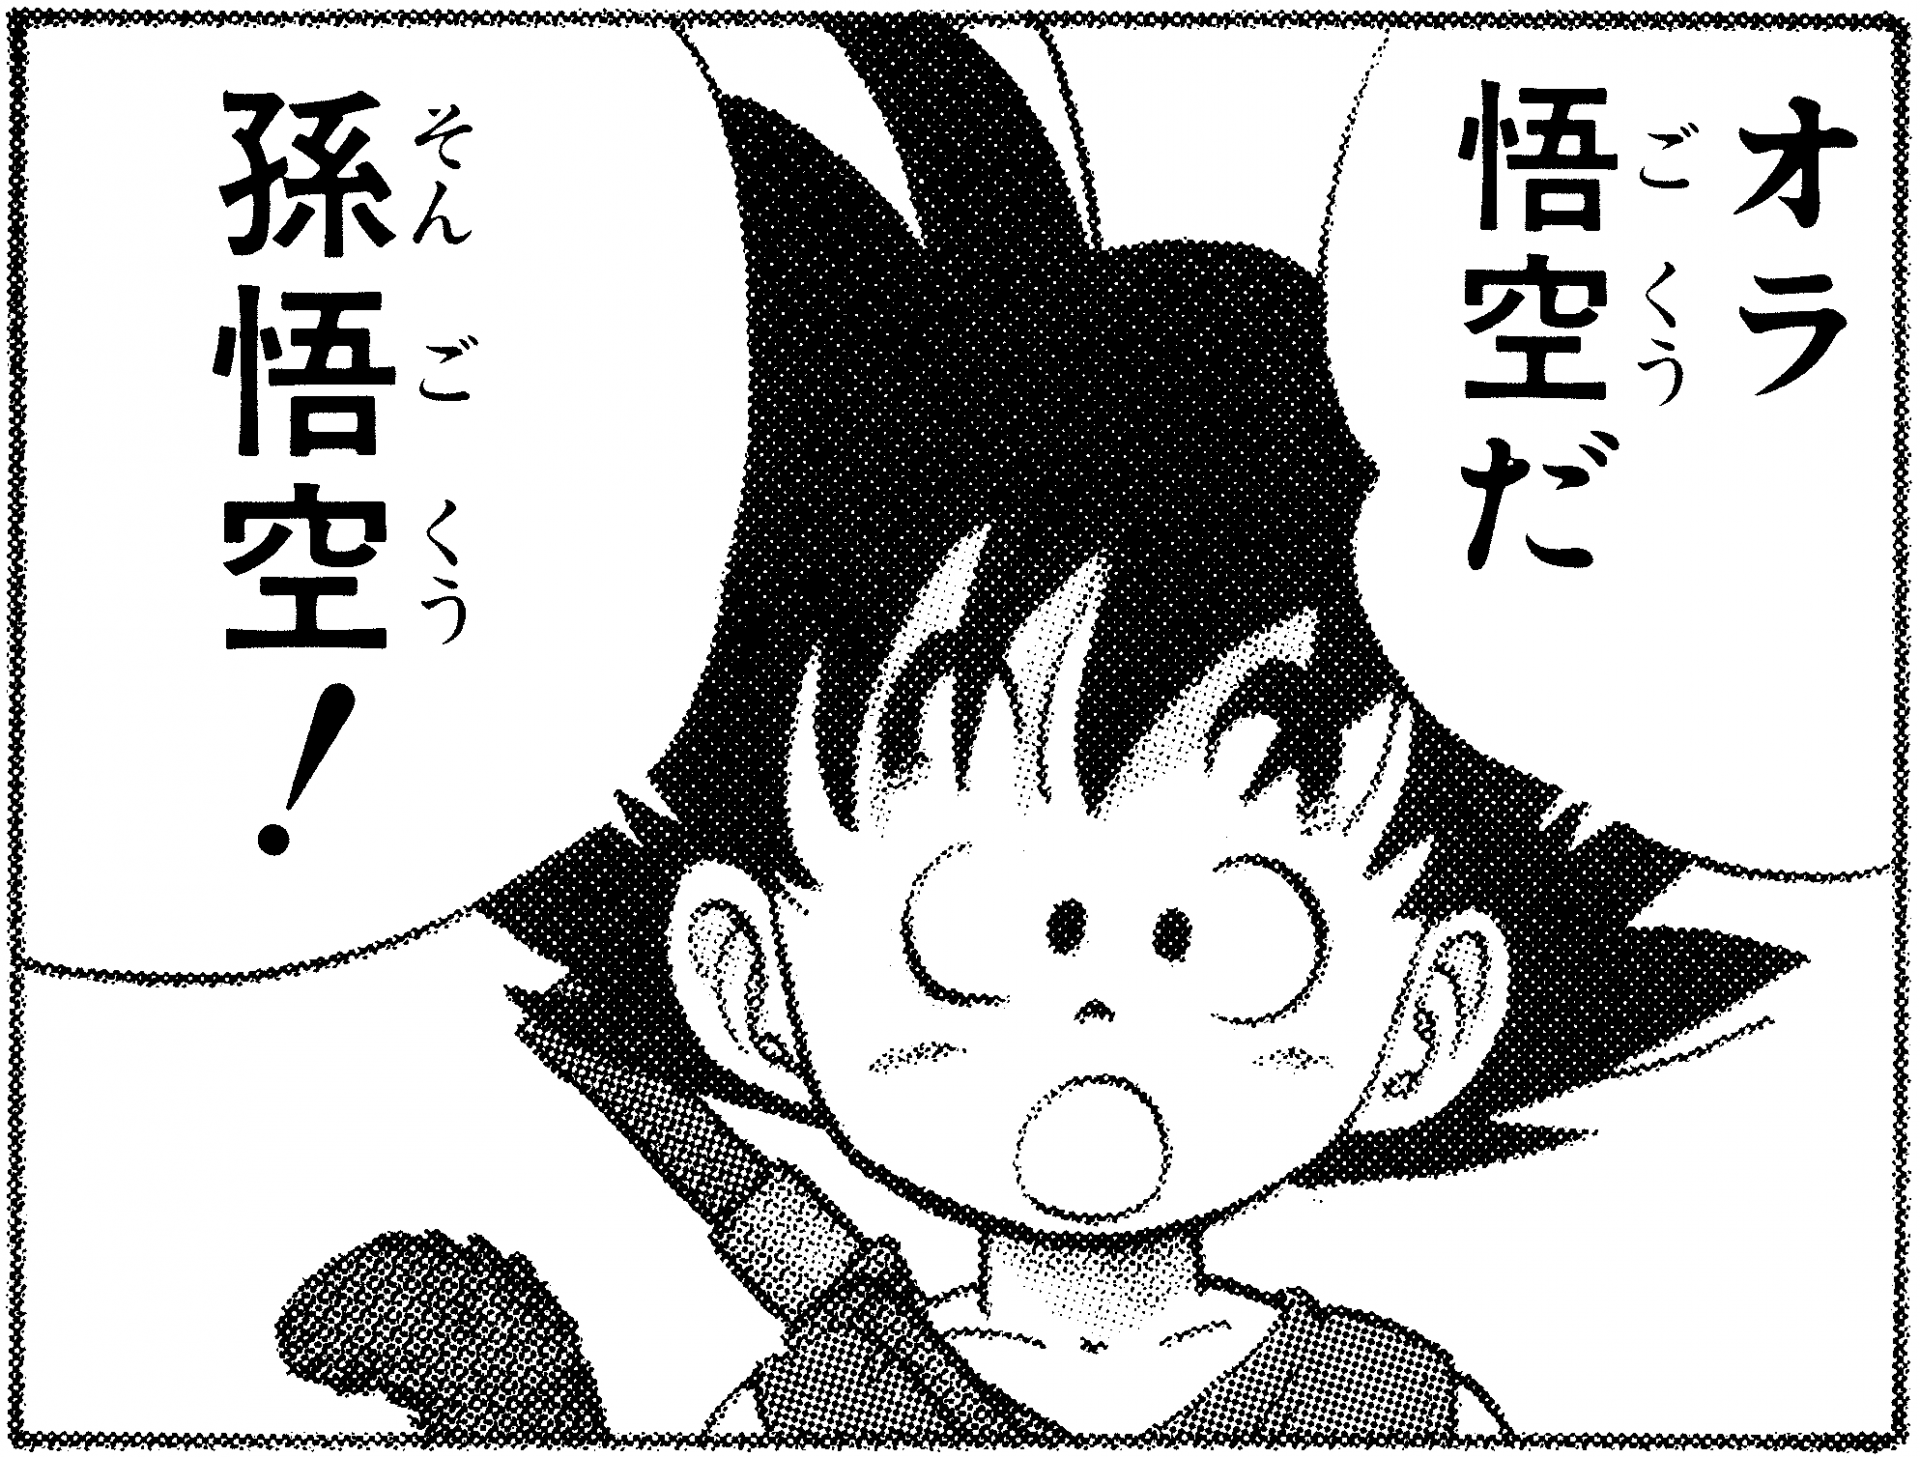 Son Goku> 𝑷𝒂𝒏𝒆𝒍 𝑴𝒂𝒏𝒈𝒂